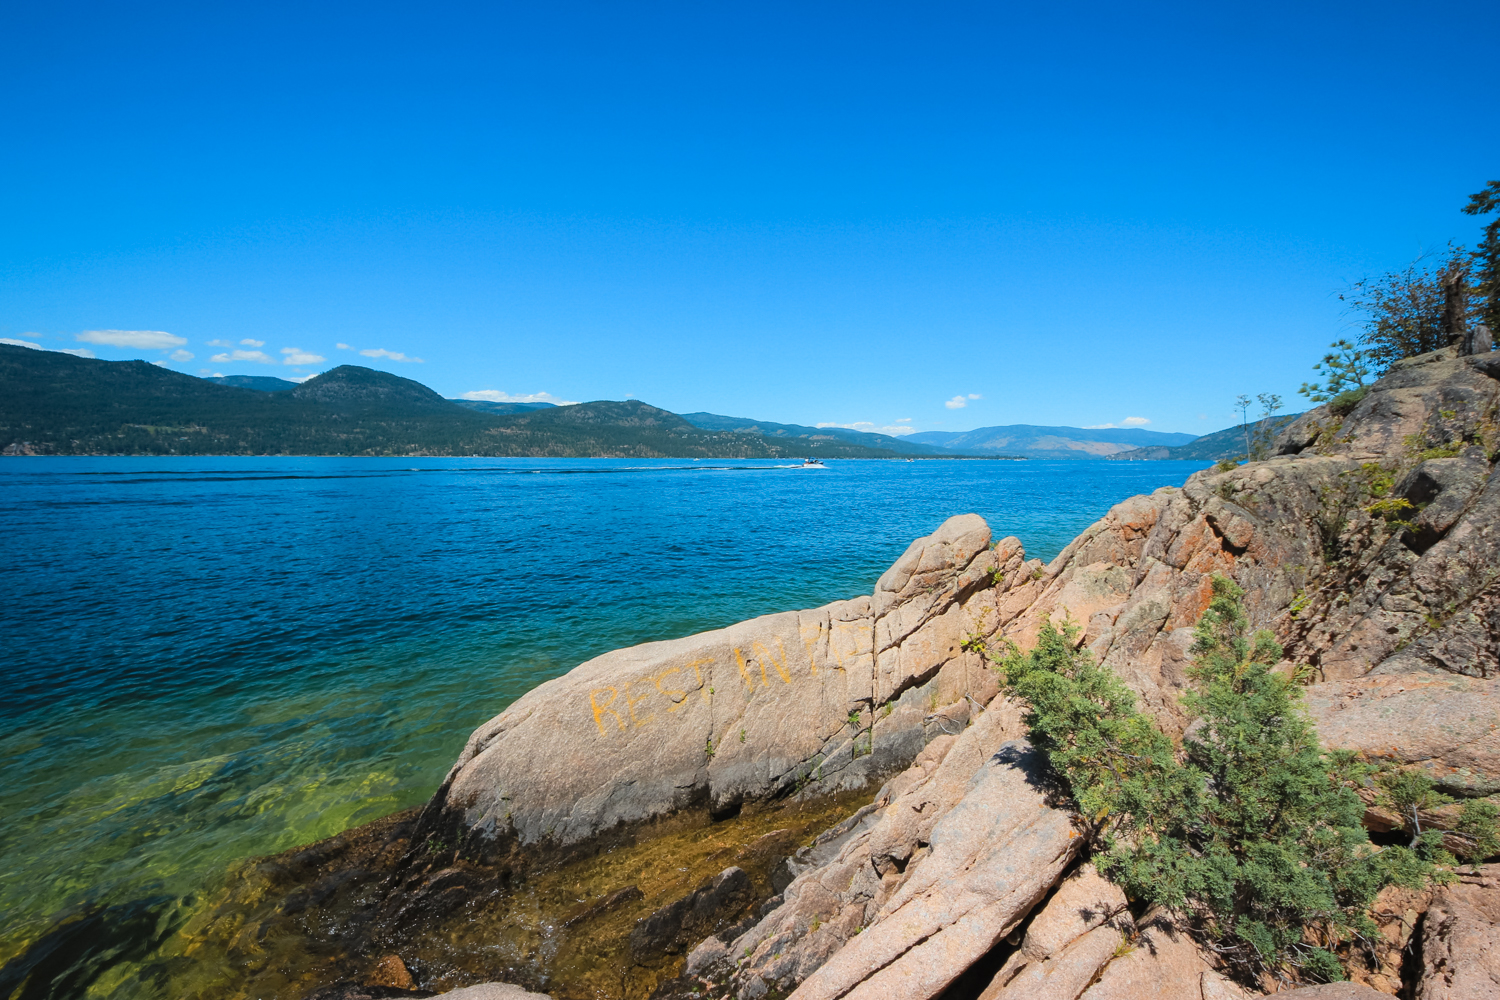 Rocky shorline juts into tropical coloured water on Okanagan Lake